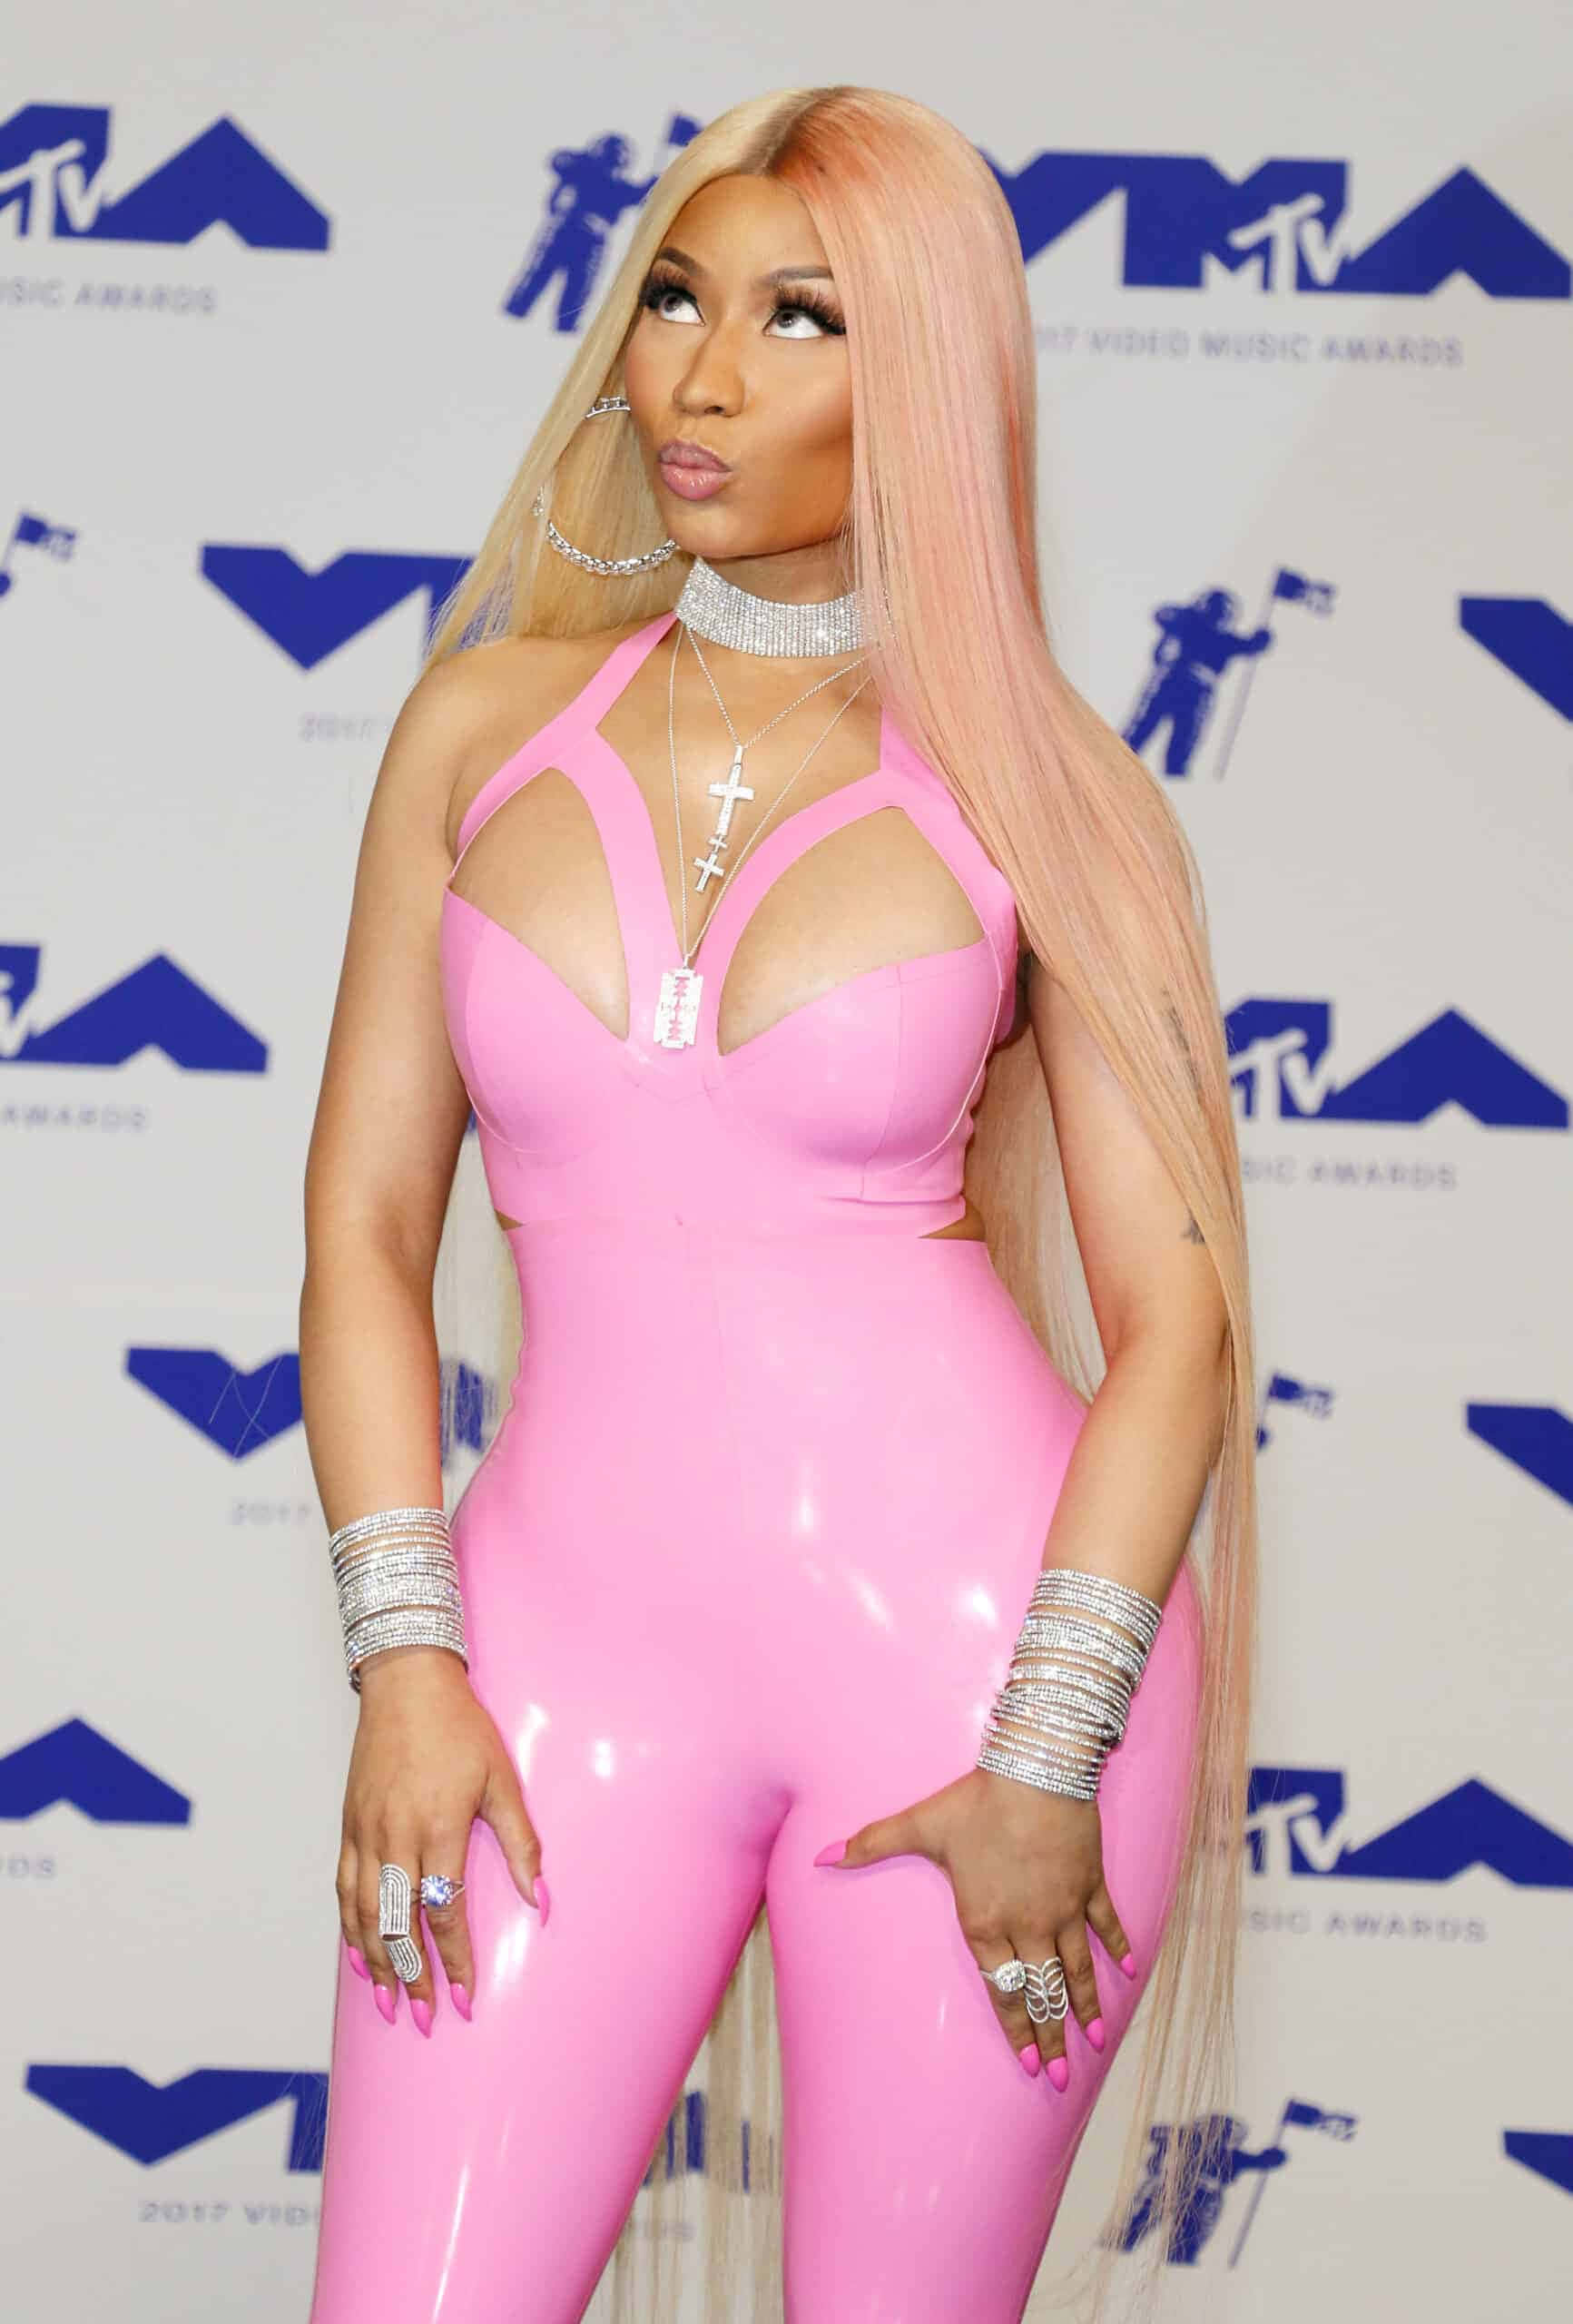 Nicki Minaj slaying the music industry